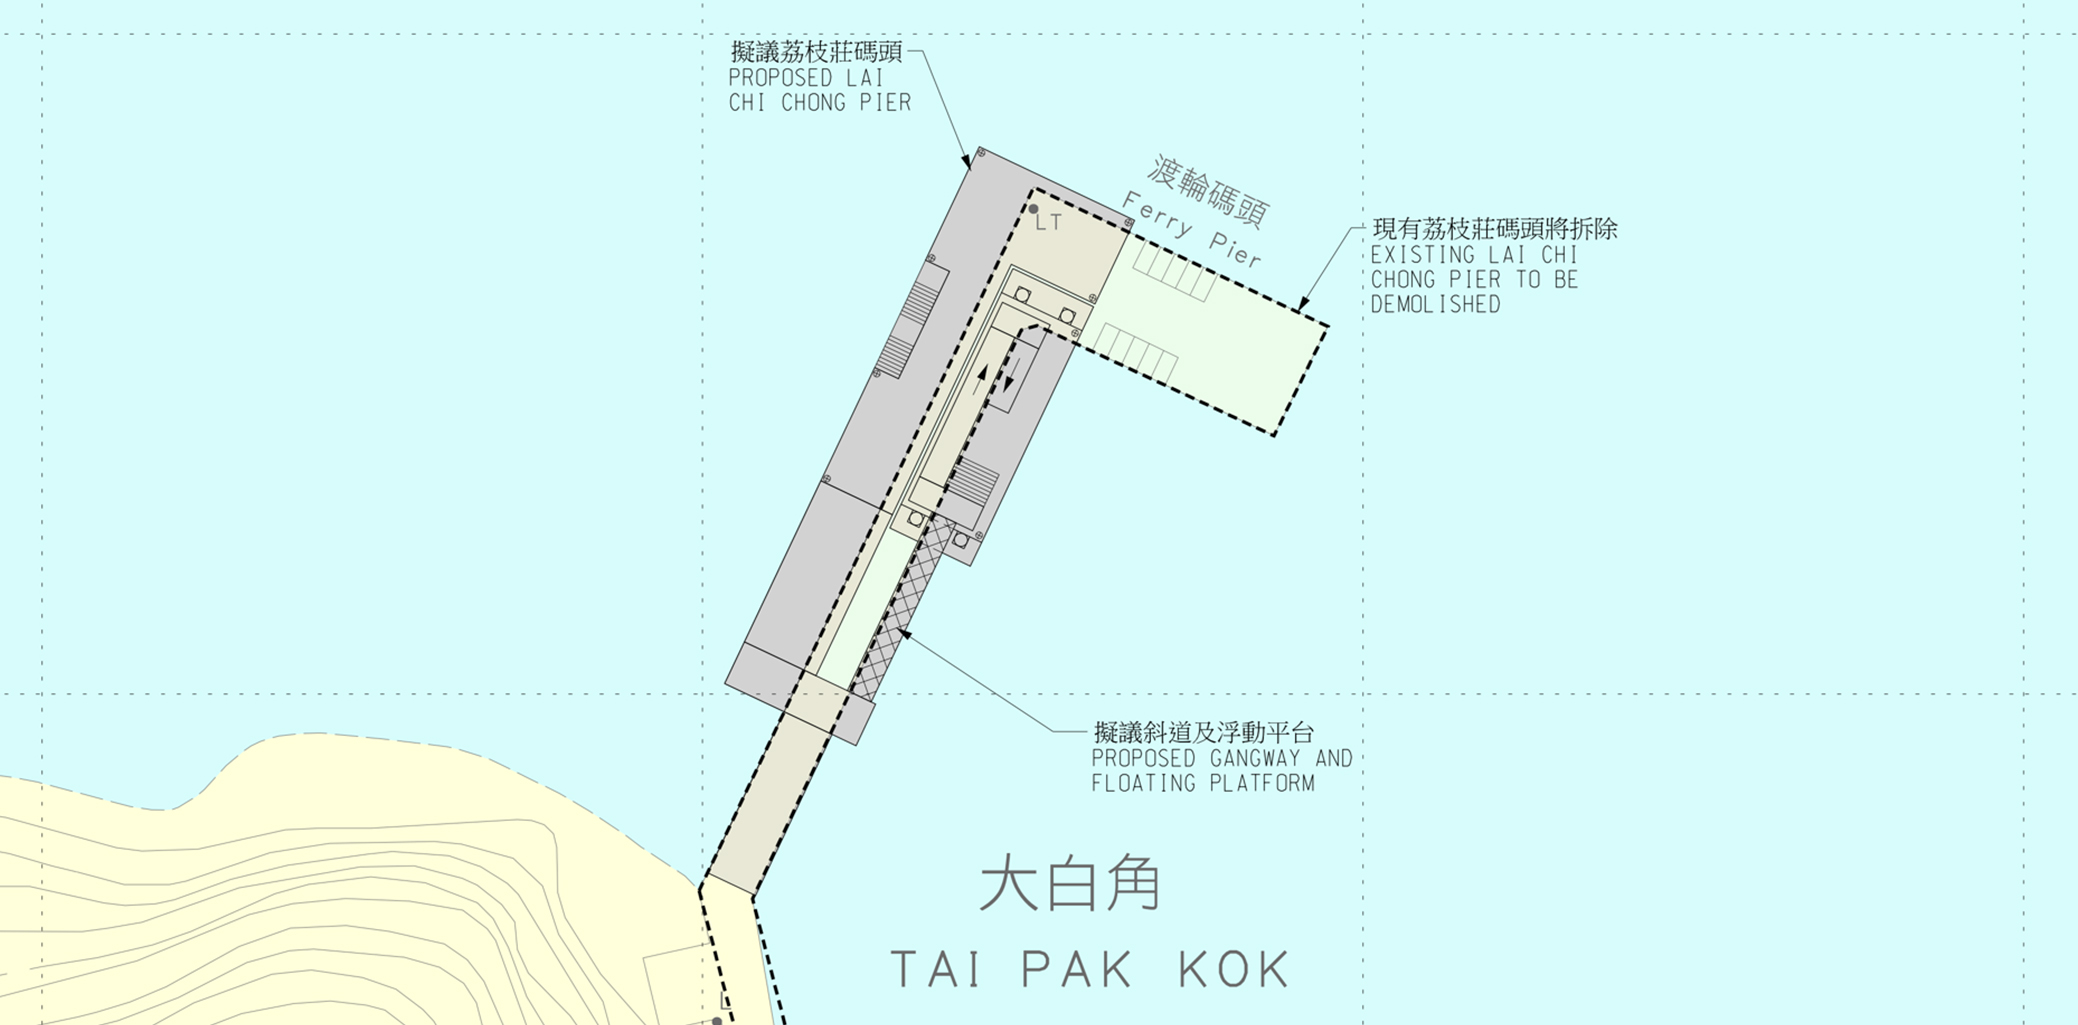 Layout of Lai Chi Chong Pier